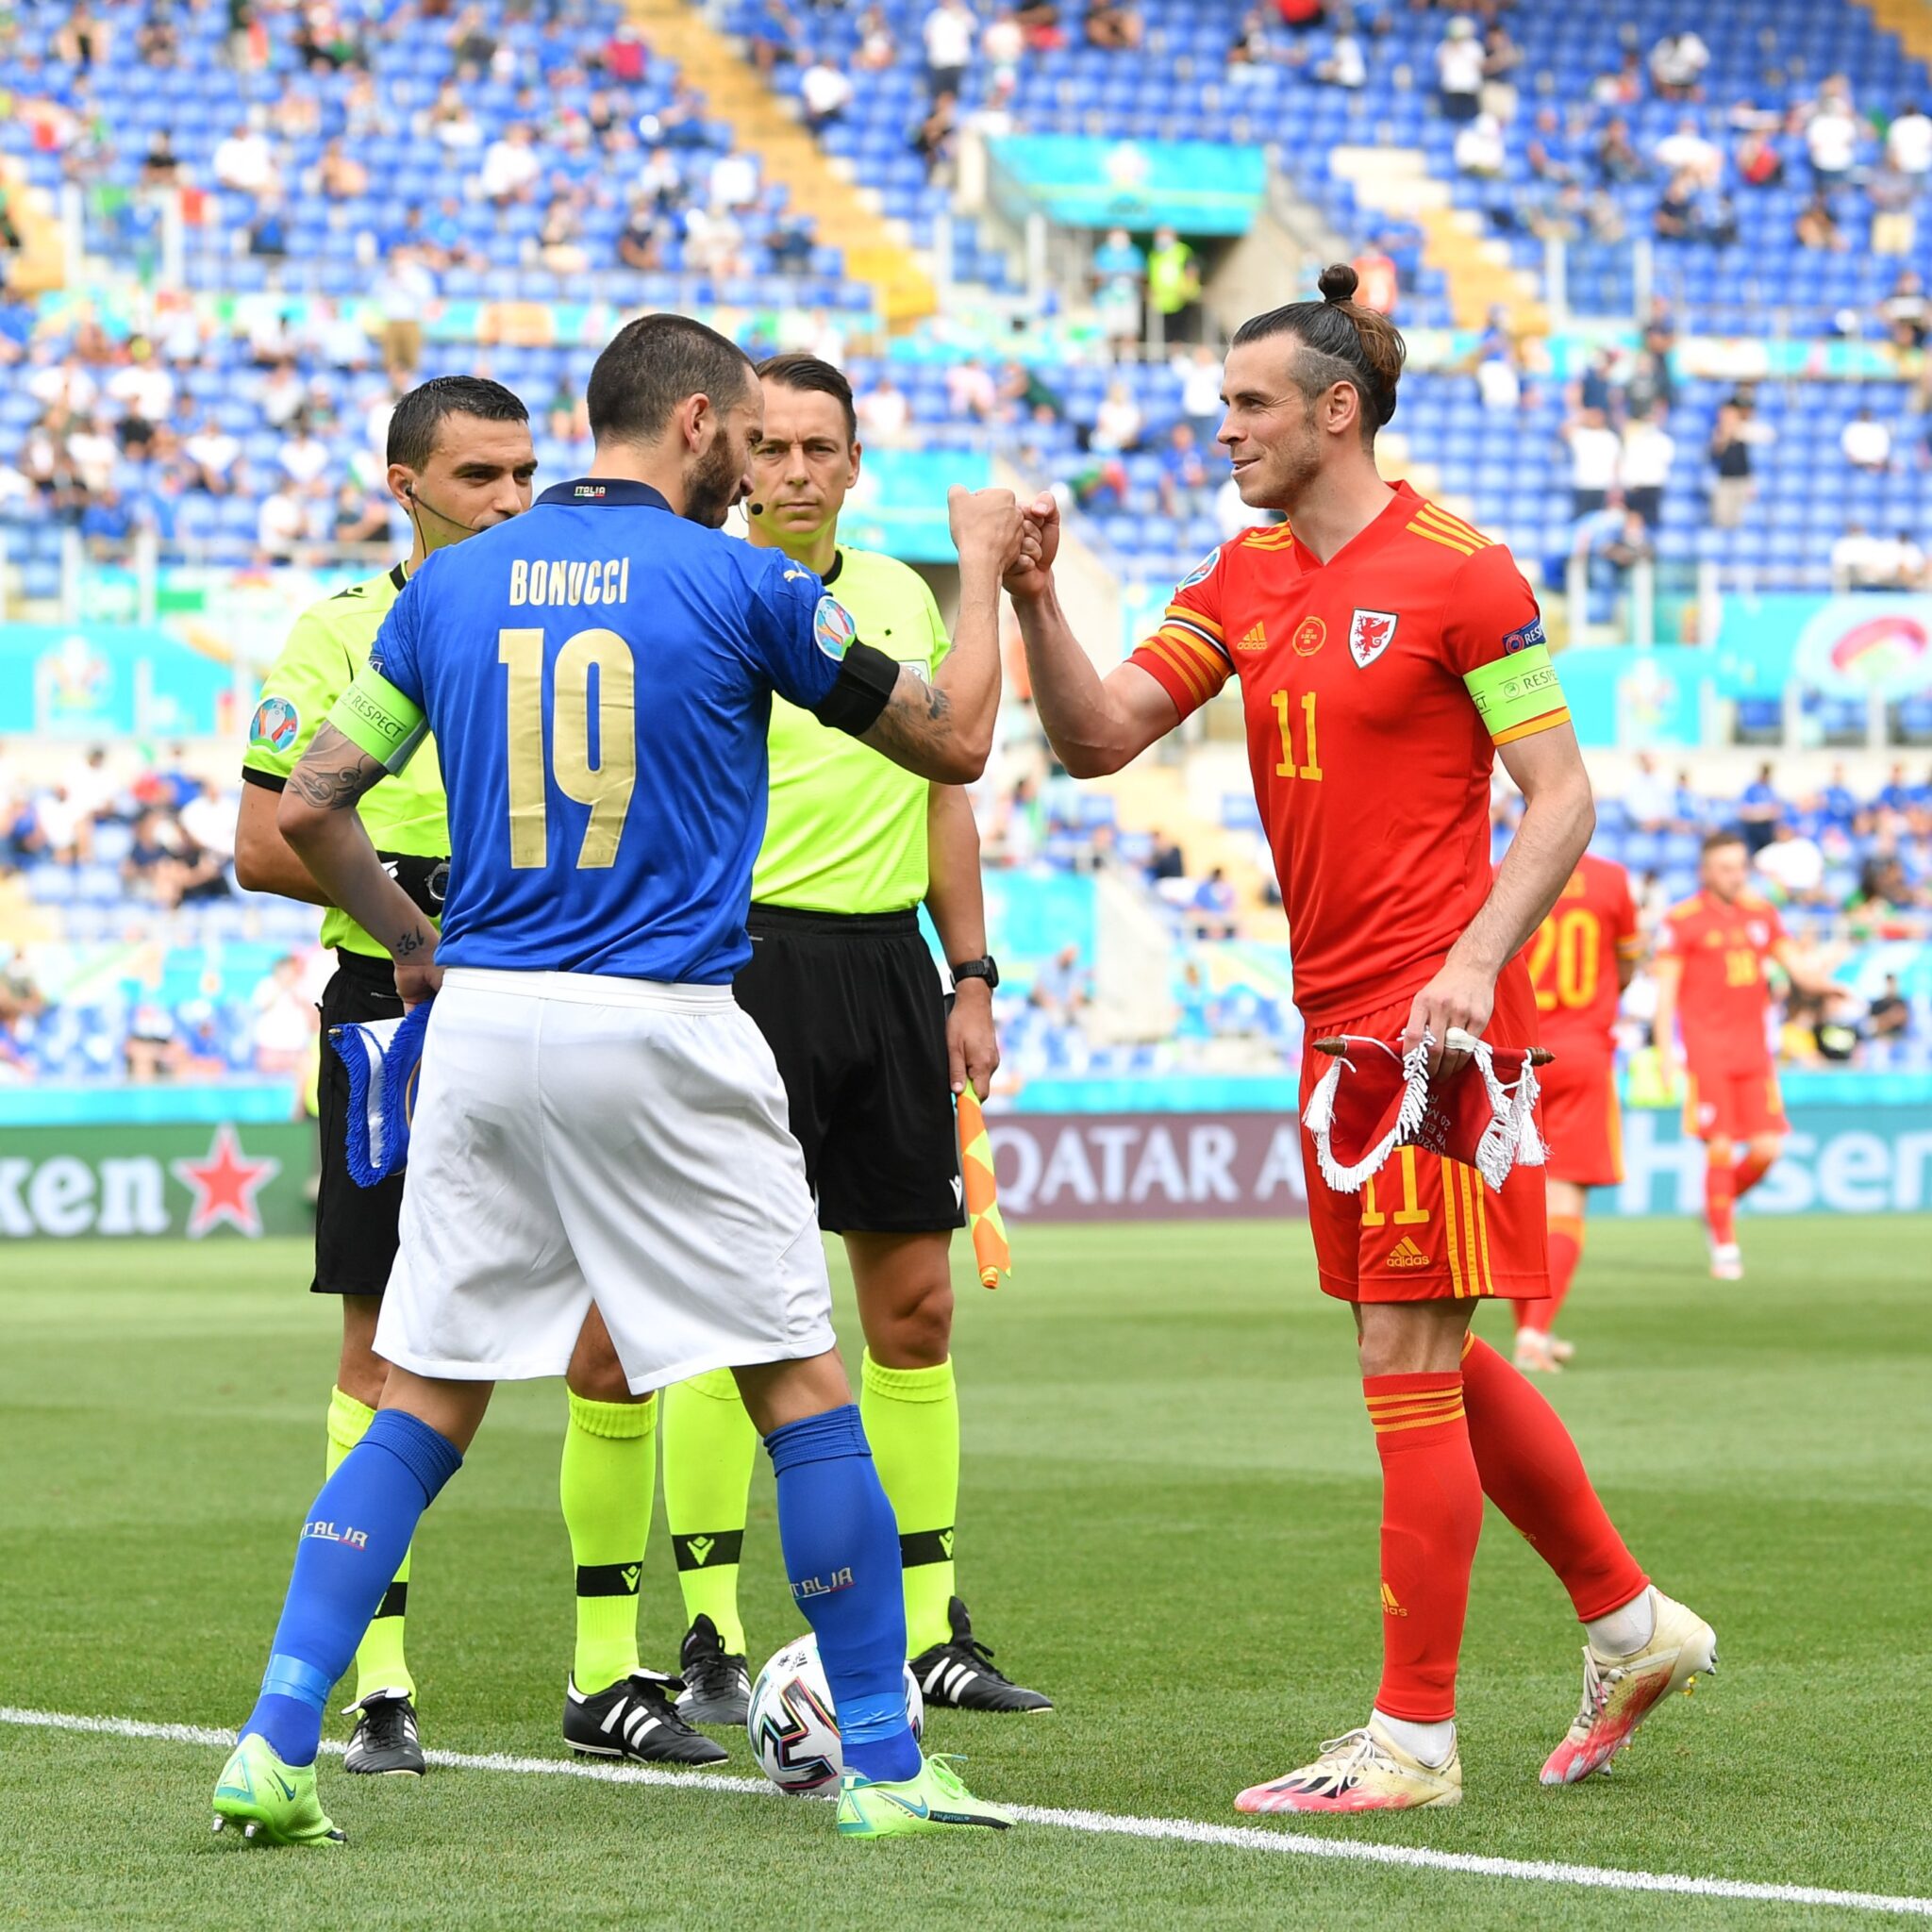 UEFA EURO 2020 Italy vs Wales Full Match Highlights The